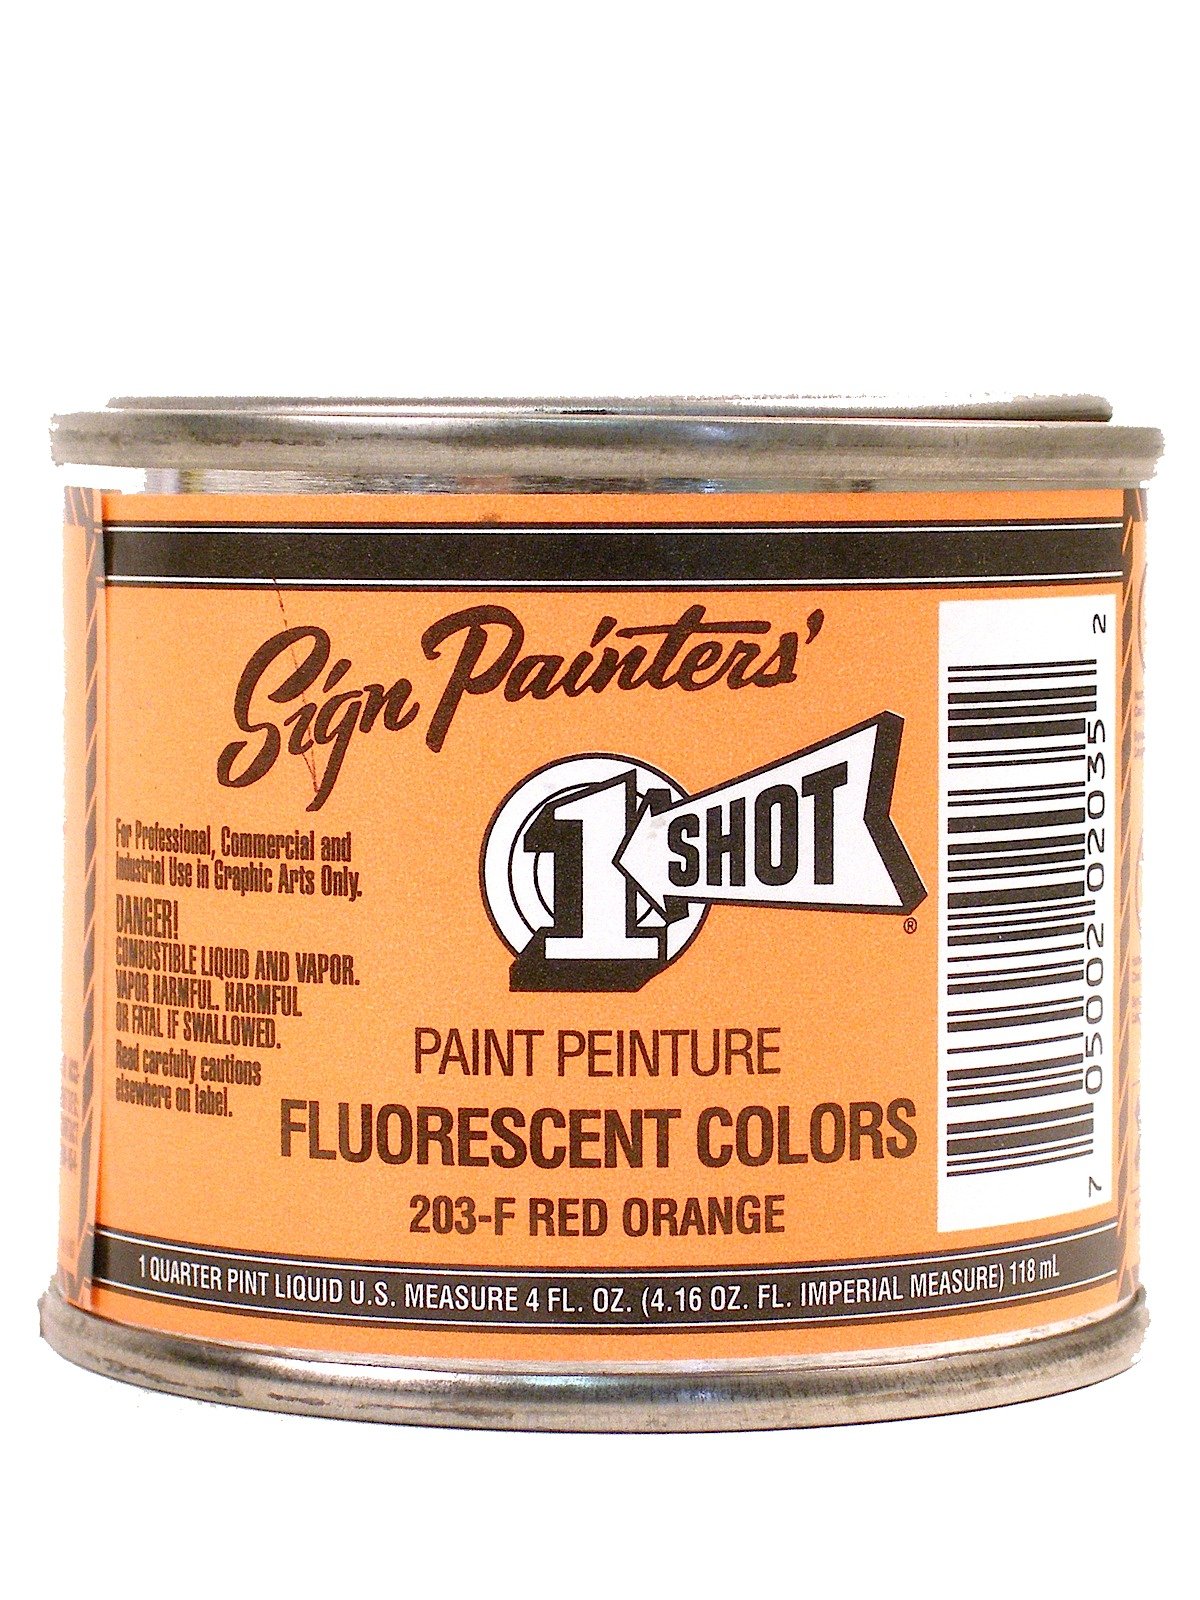 1-Shot - Fluorescent Bulletin Color